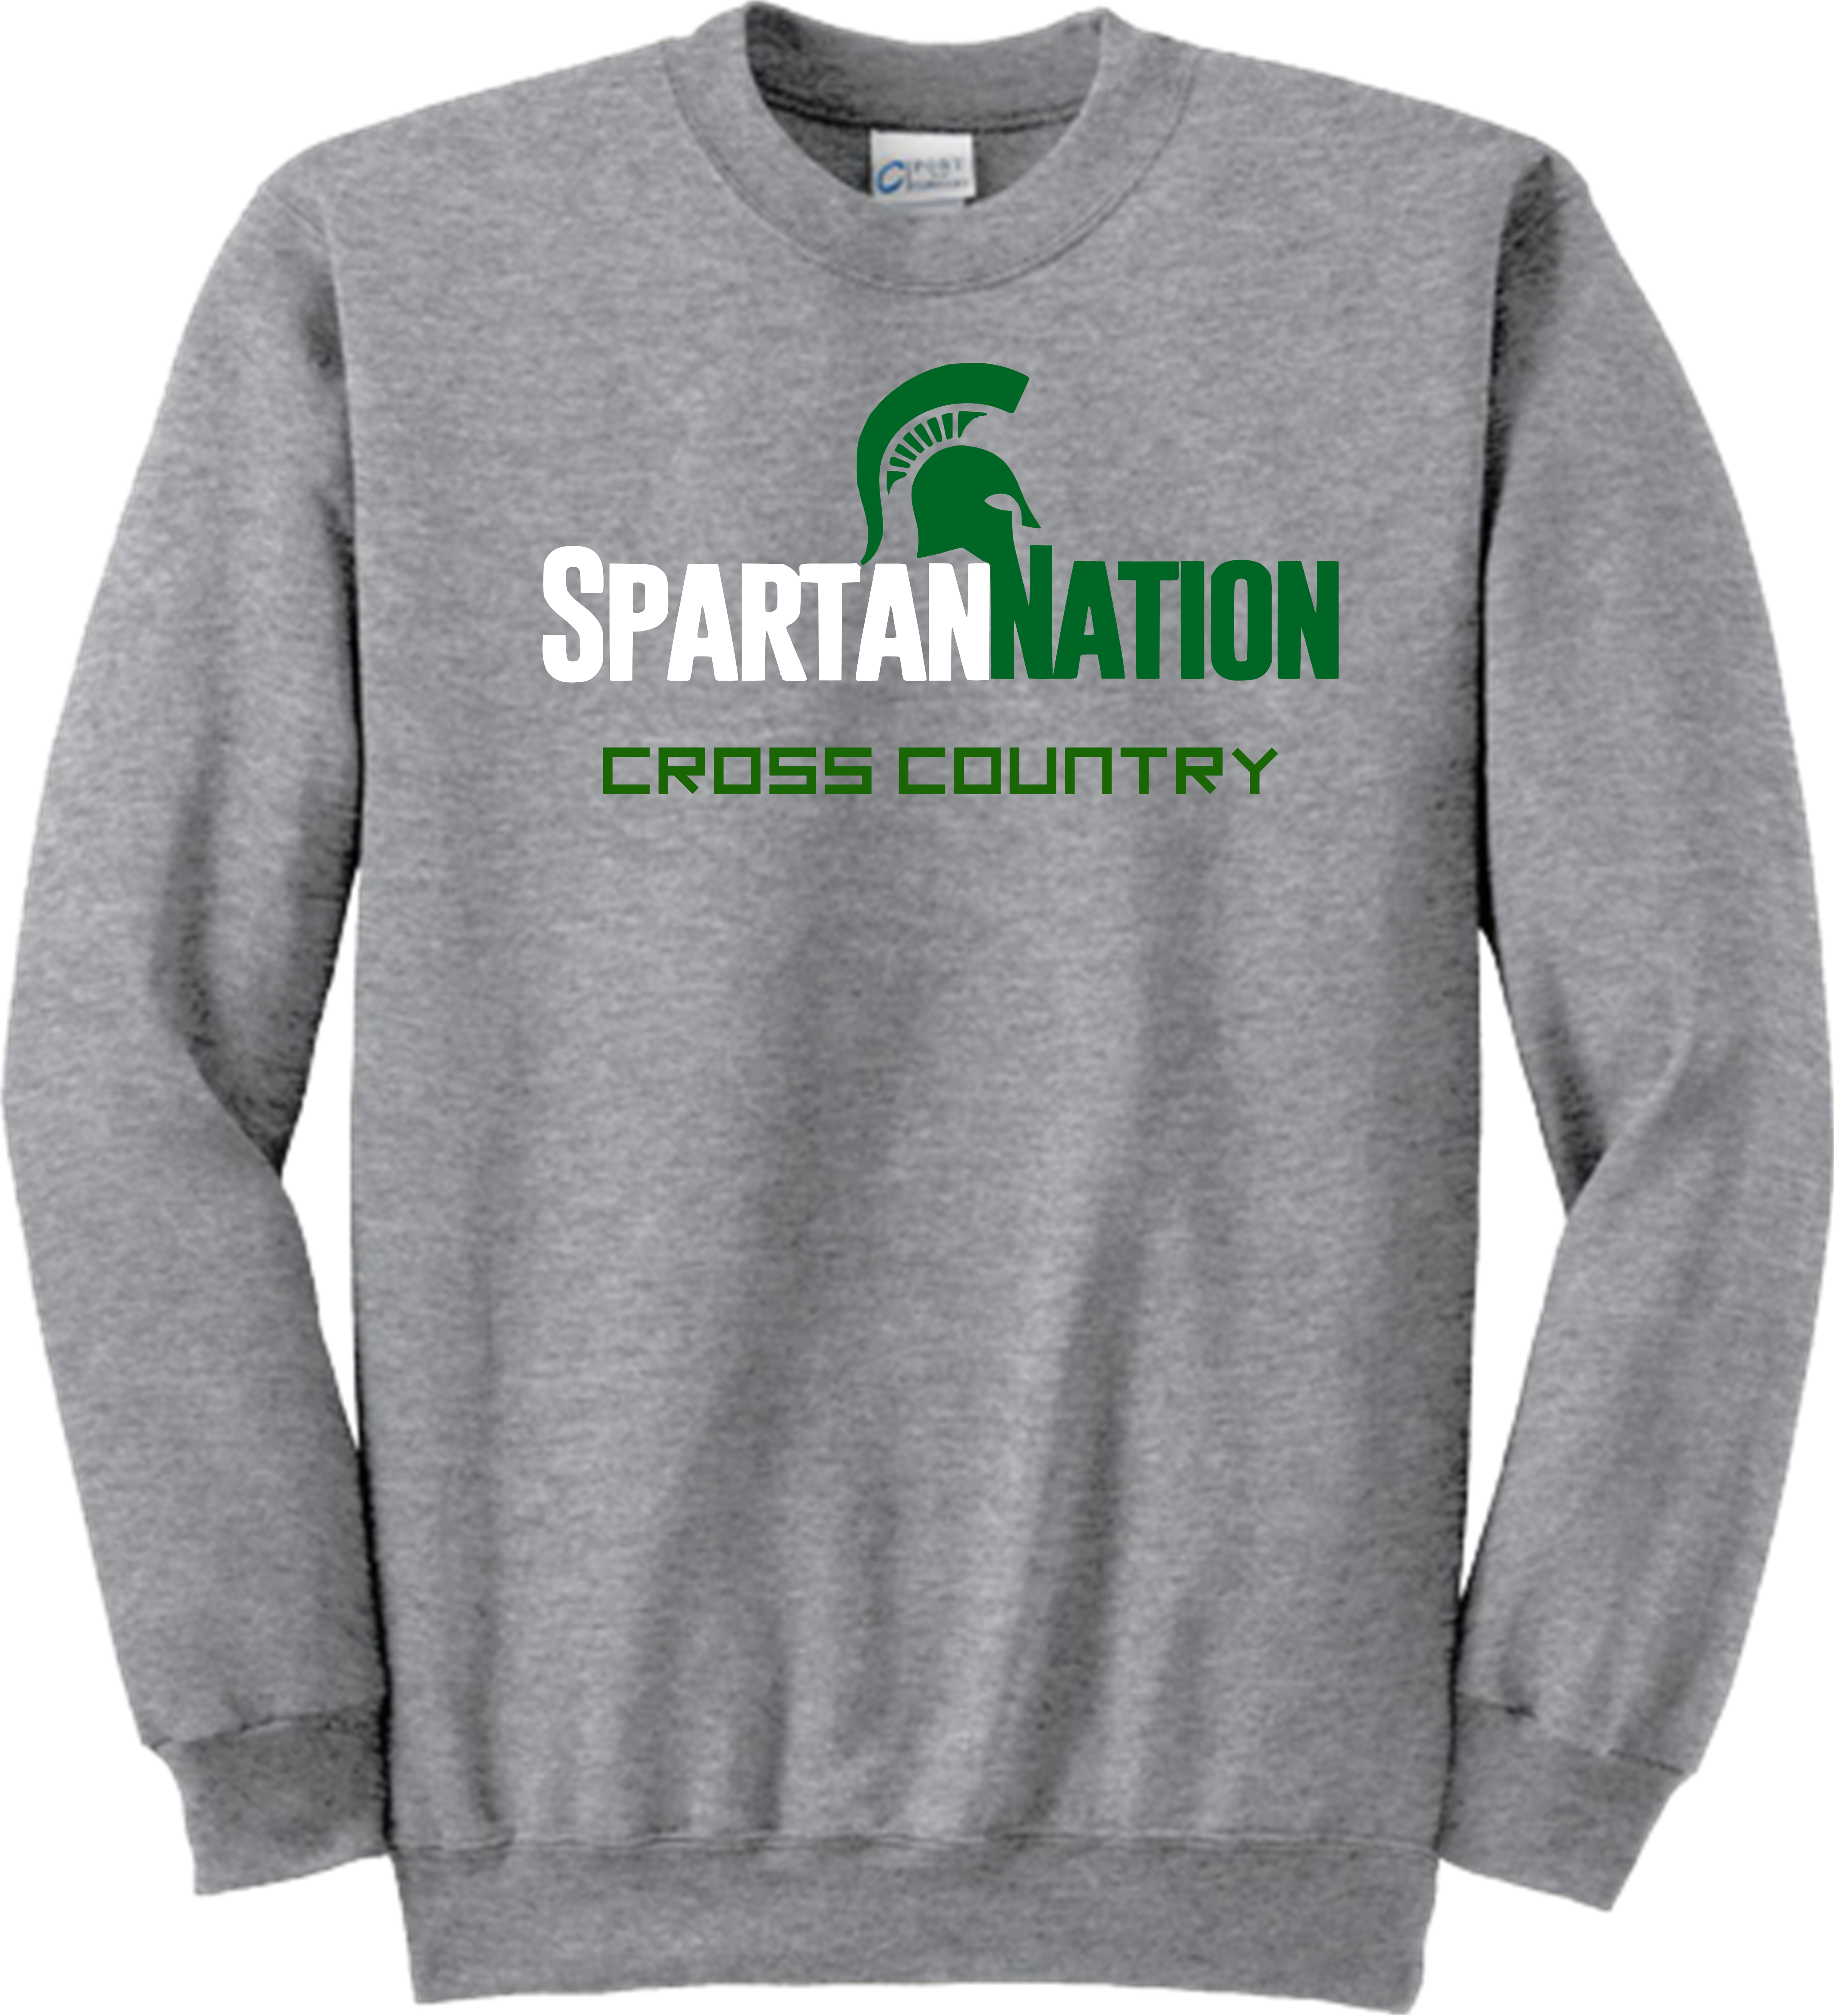 Spartan Nation CROSS COUNTRY Sweatshirt